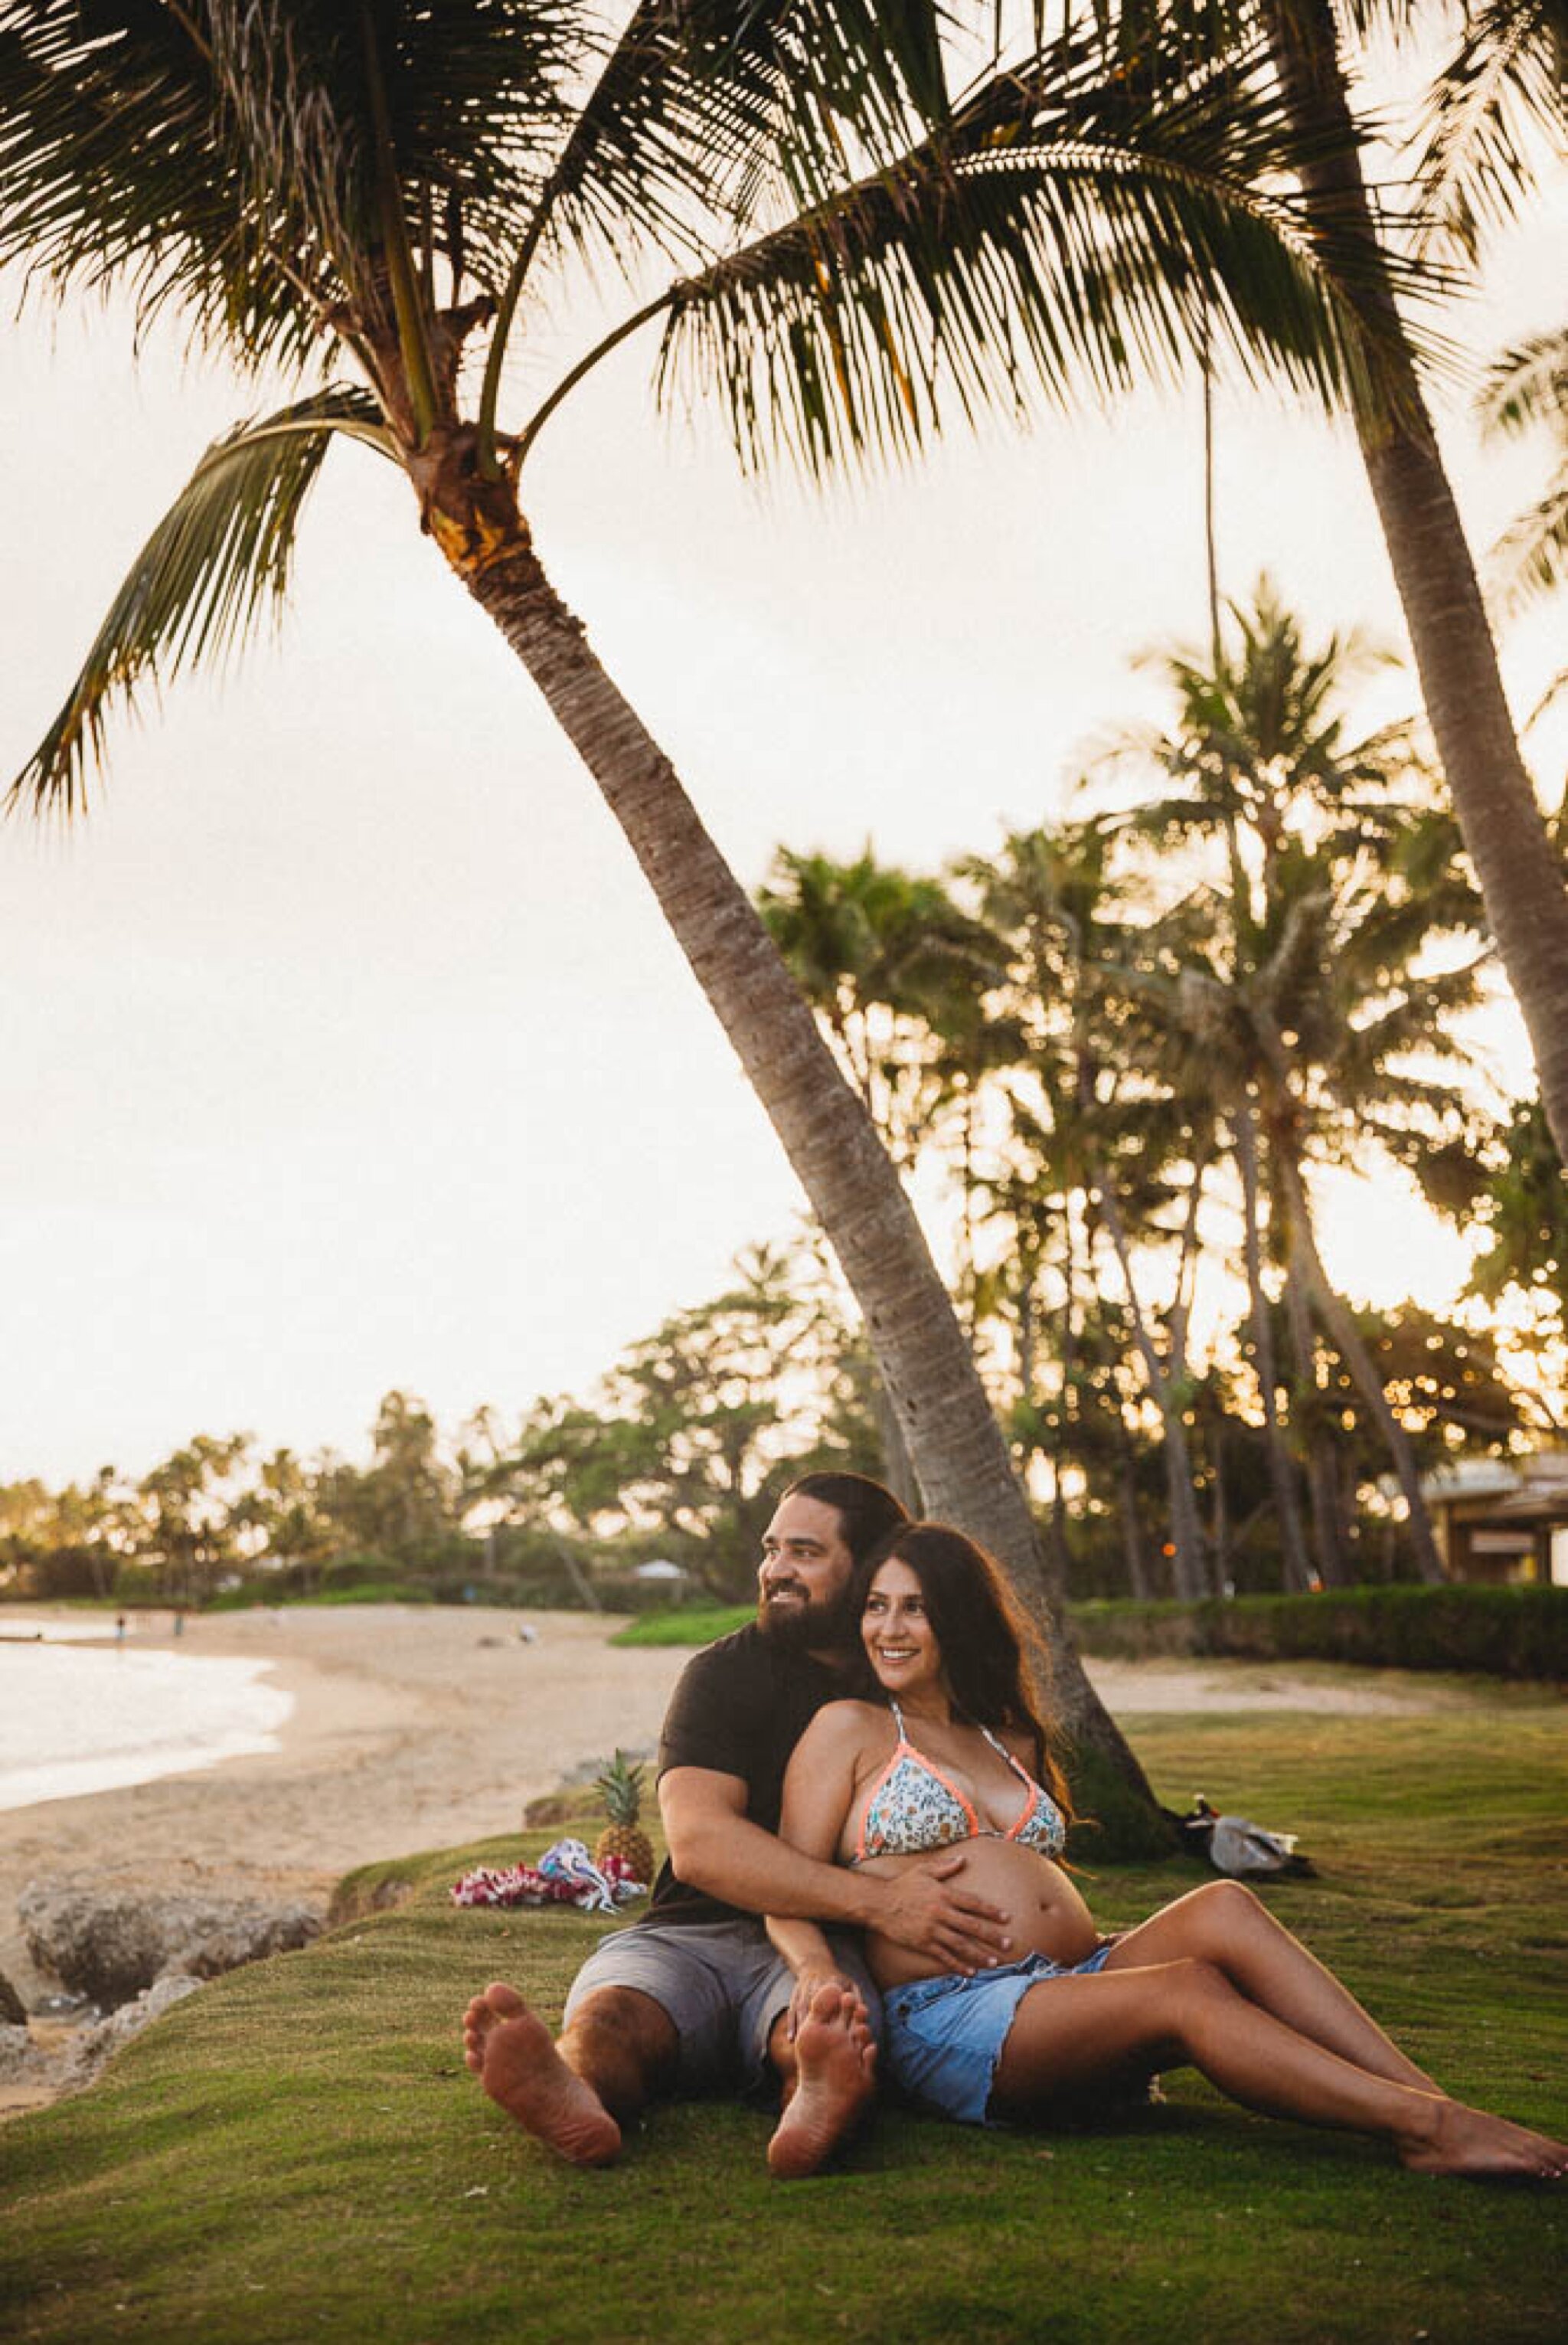 Sunset Maternity Photography Session at Kahala Beach in Oahu - Hawaii Family Photographer - Johanna Dye 4.jpg